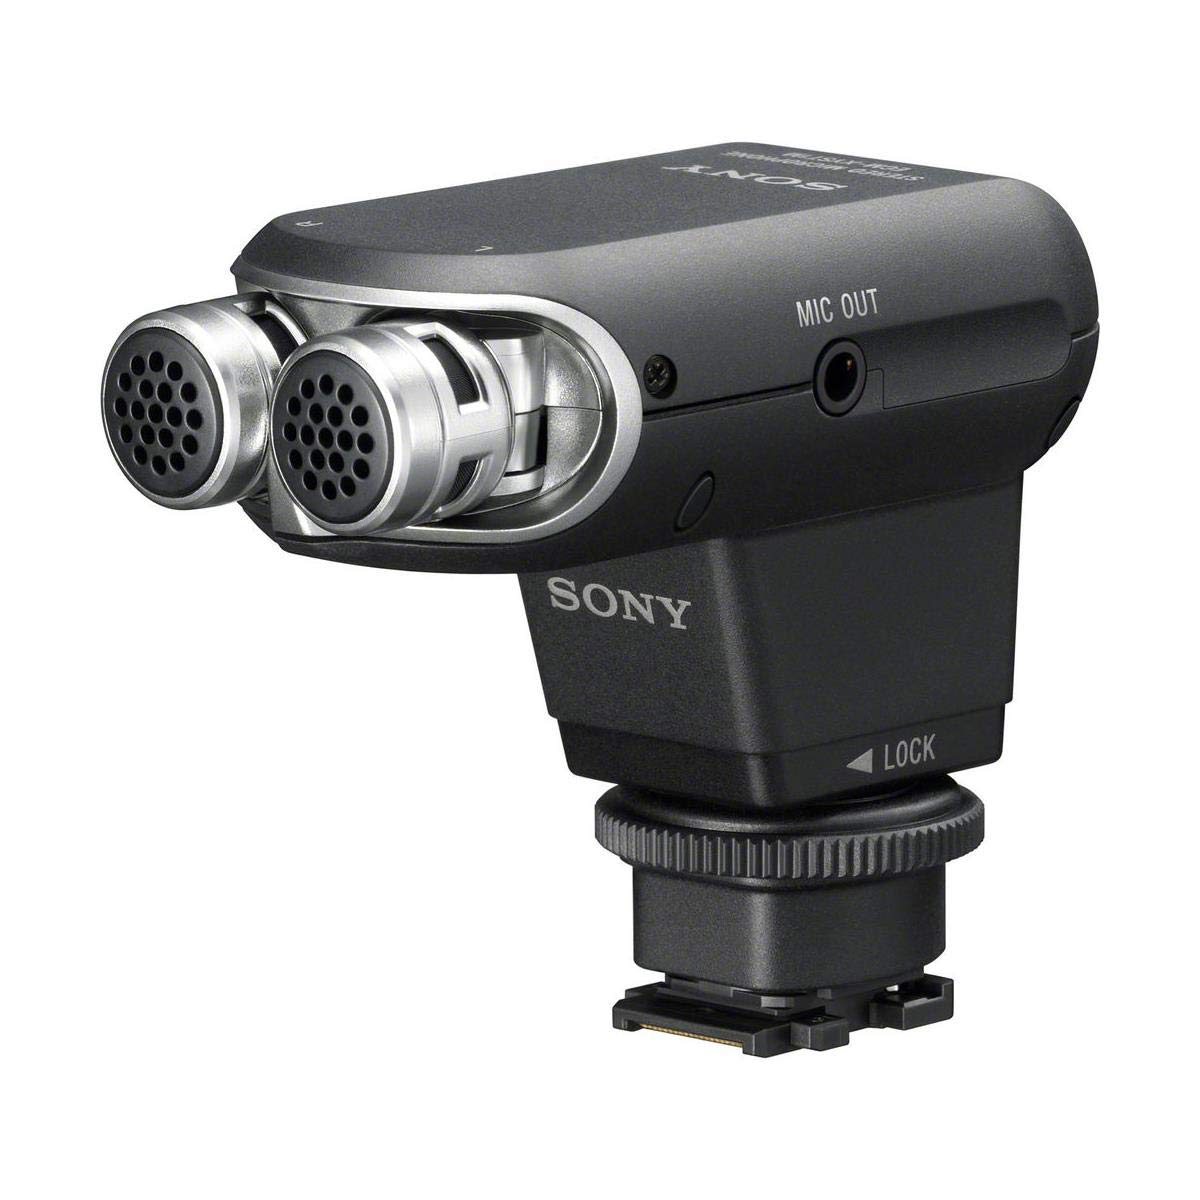 Sony Cyber-Shot DSC-RX1R II Full Frame Digital Camera - with Sony ECM-XYST1M Stereo Microphone